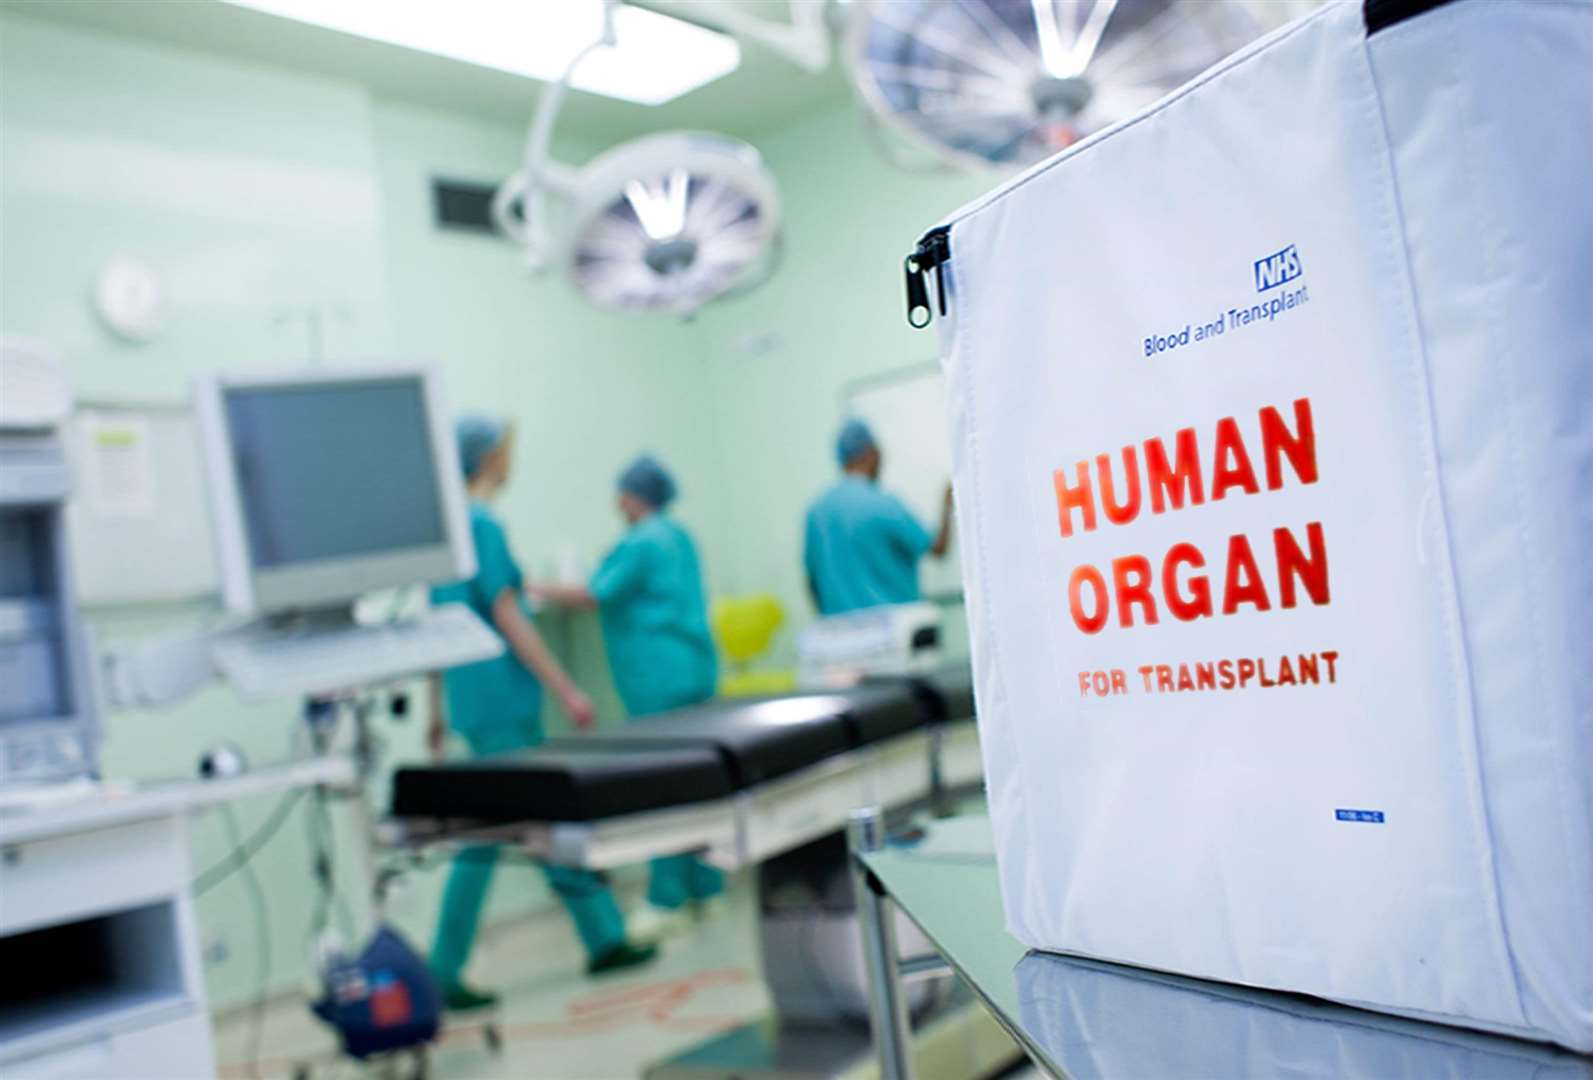 Organ donation week starts today